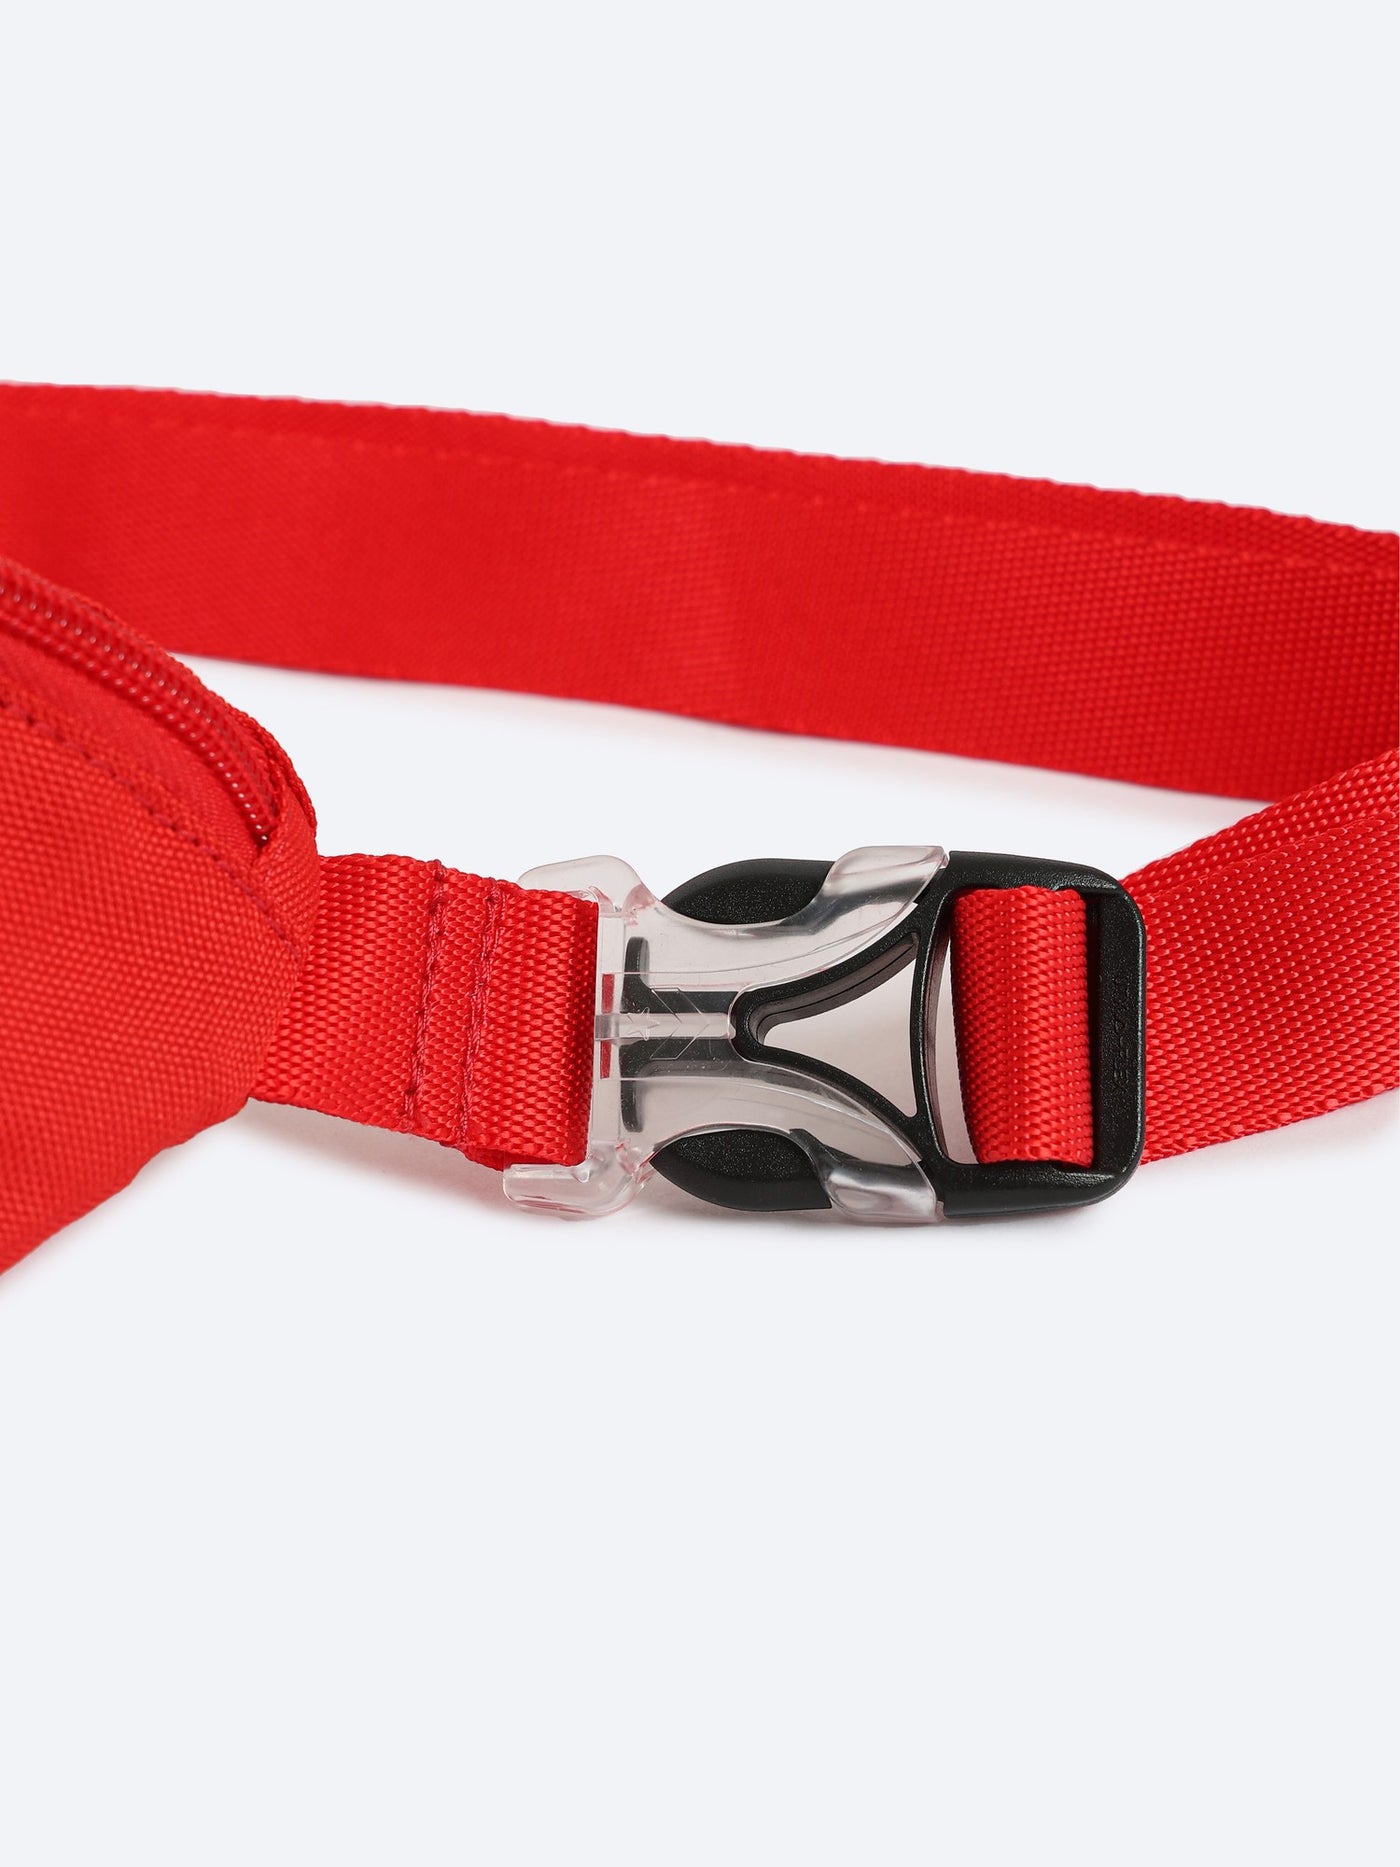 Waist Bag - Adjustable Strap - Zipper Closure